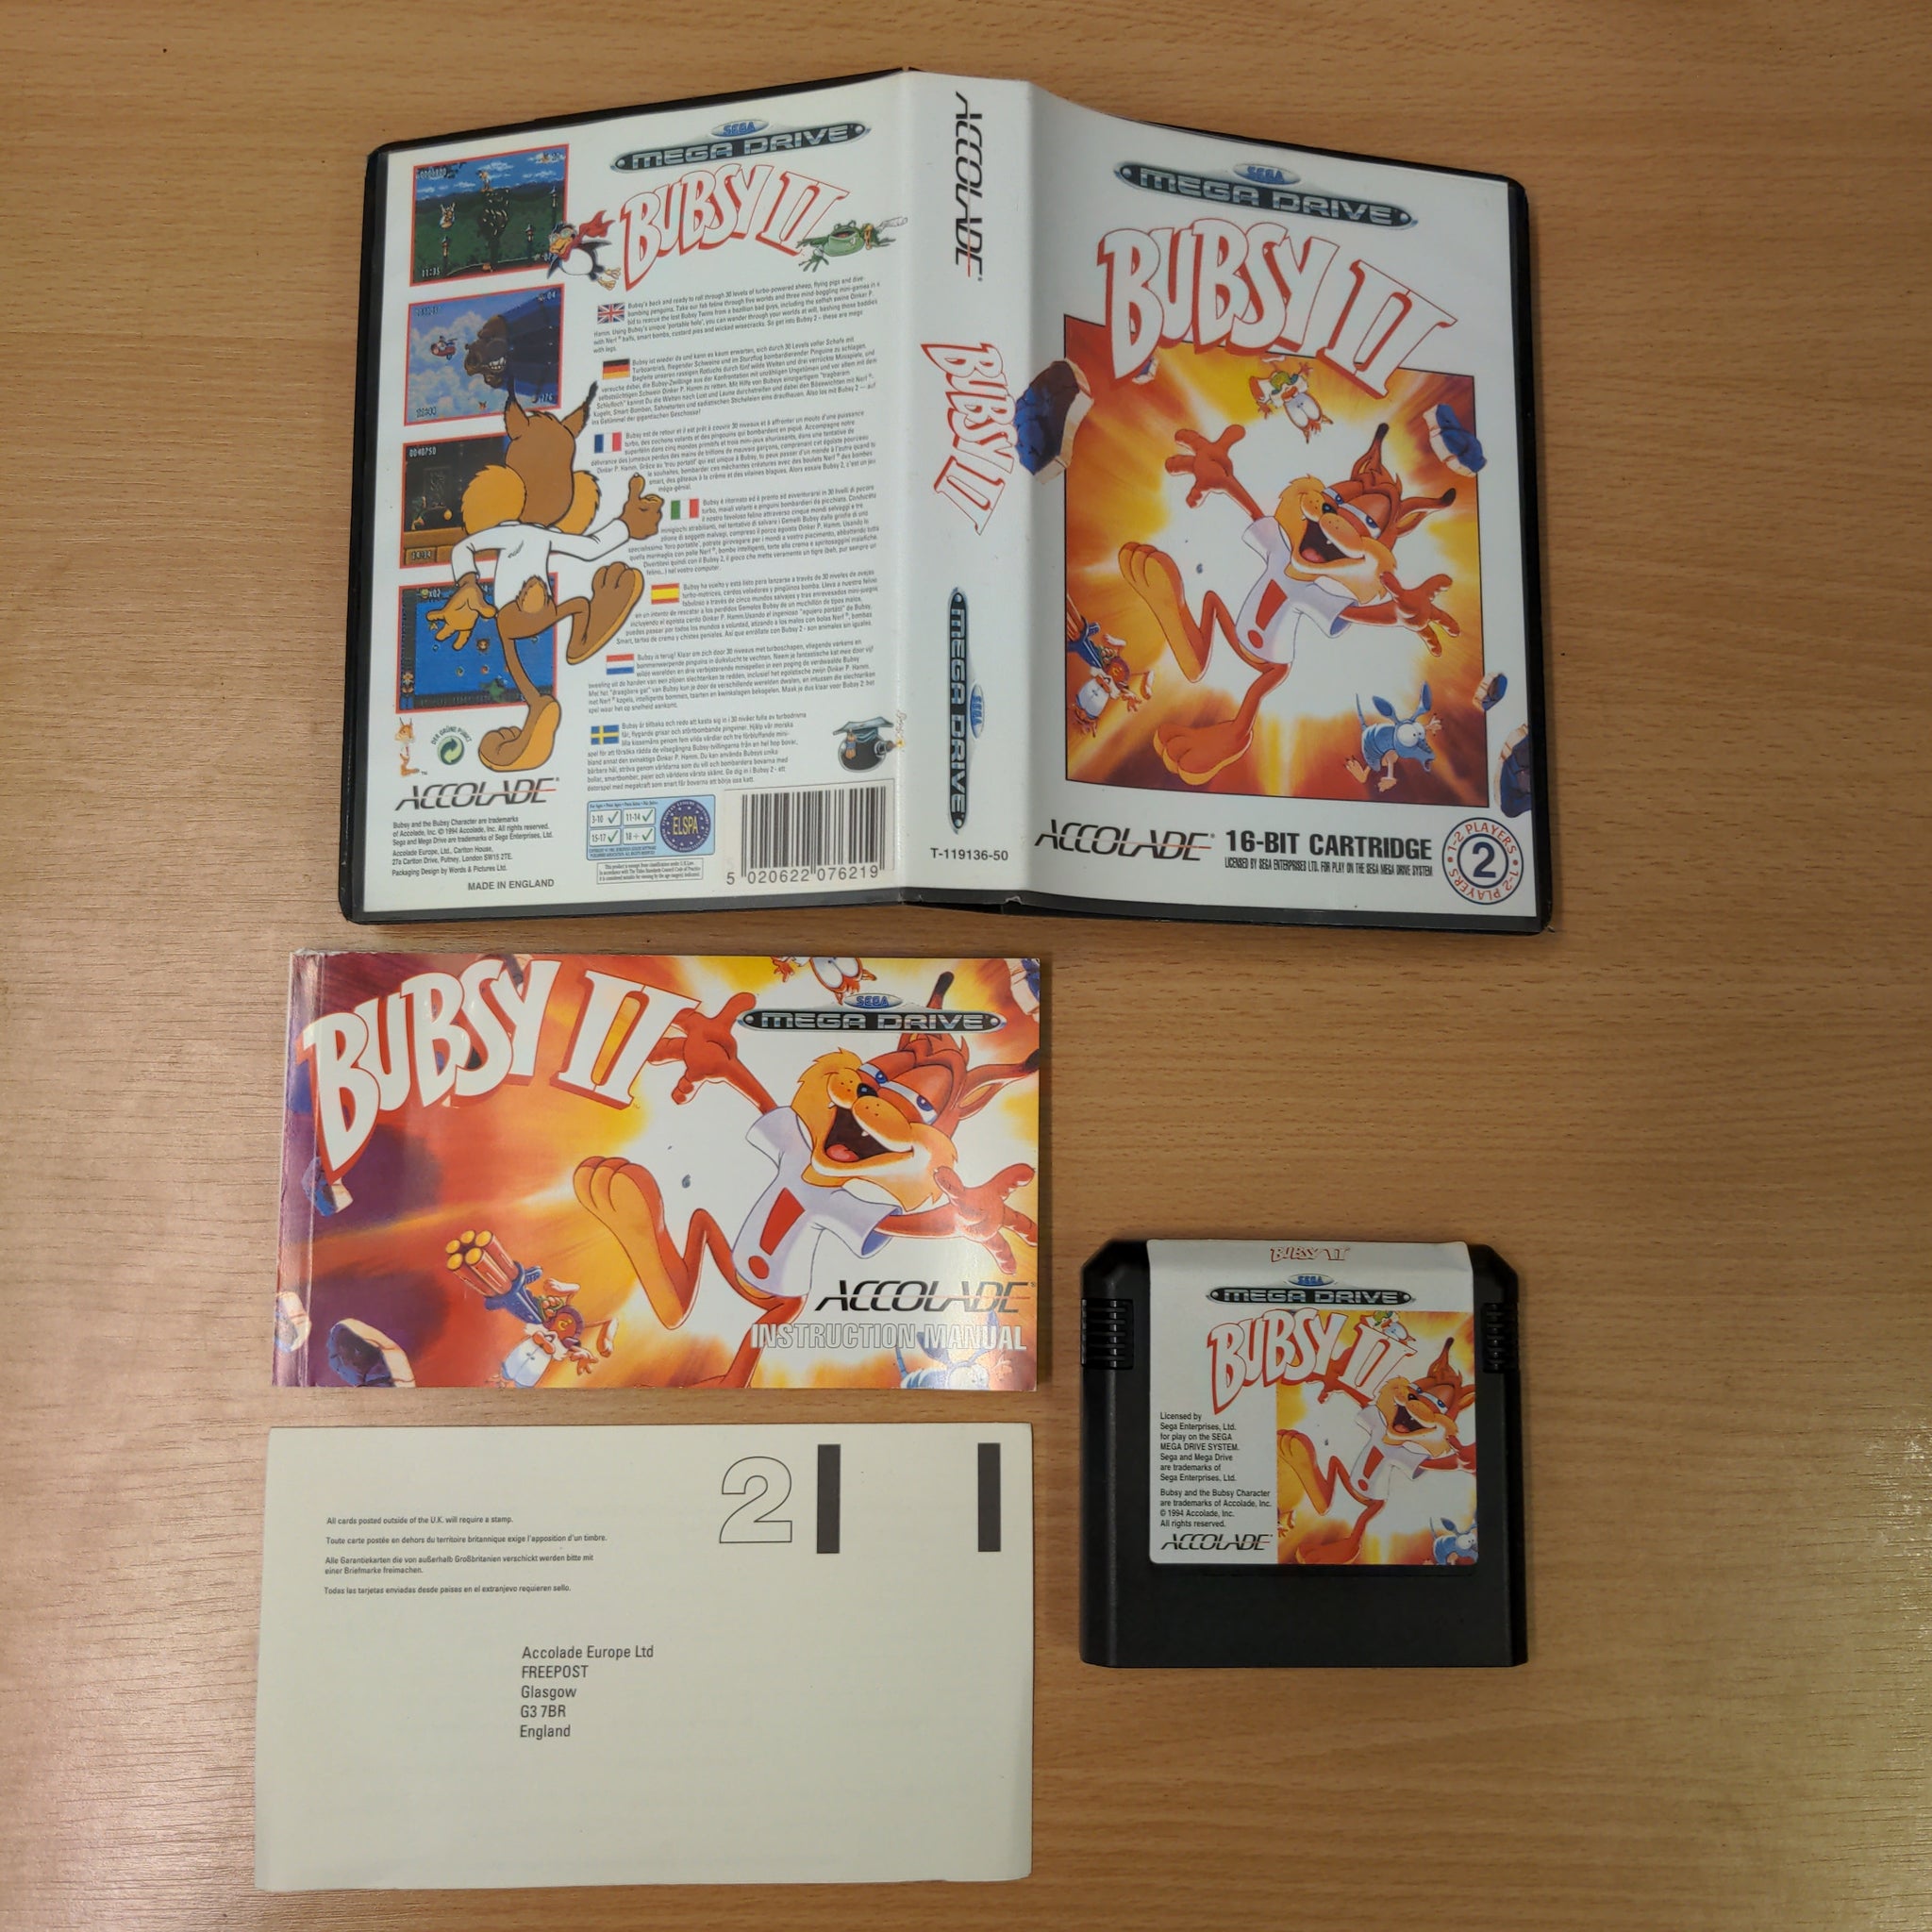 Bubsy II Sega Mega Drive game complete